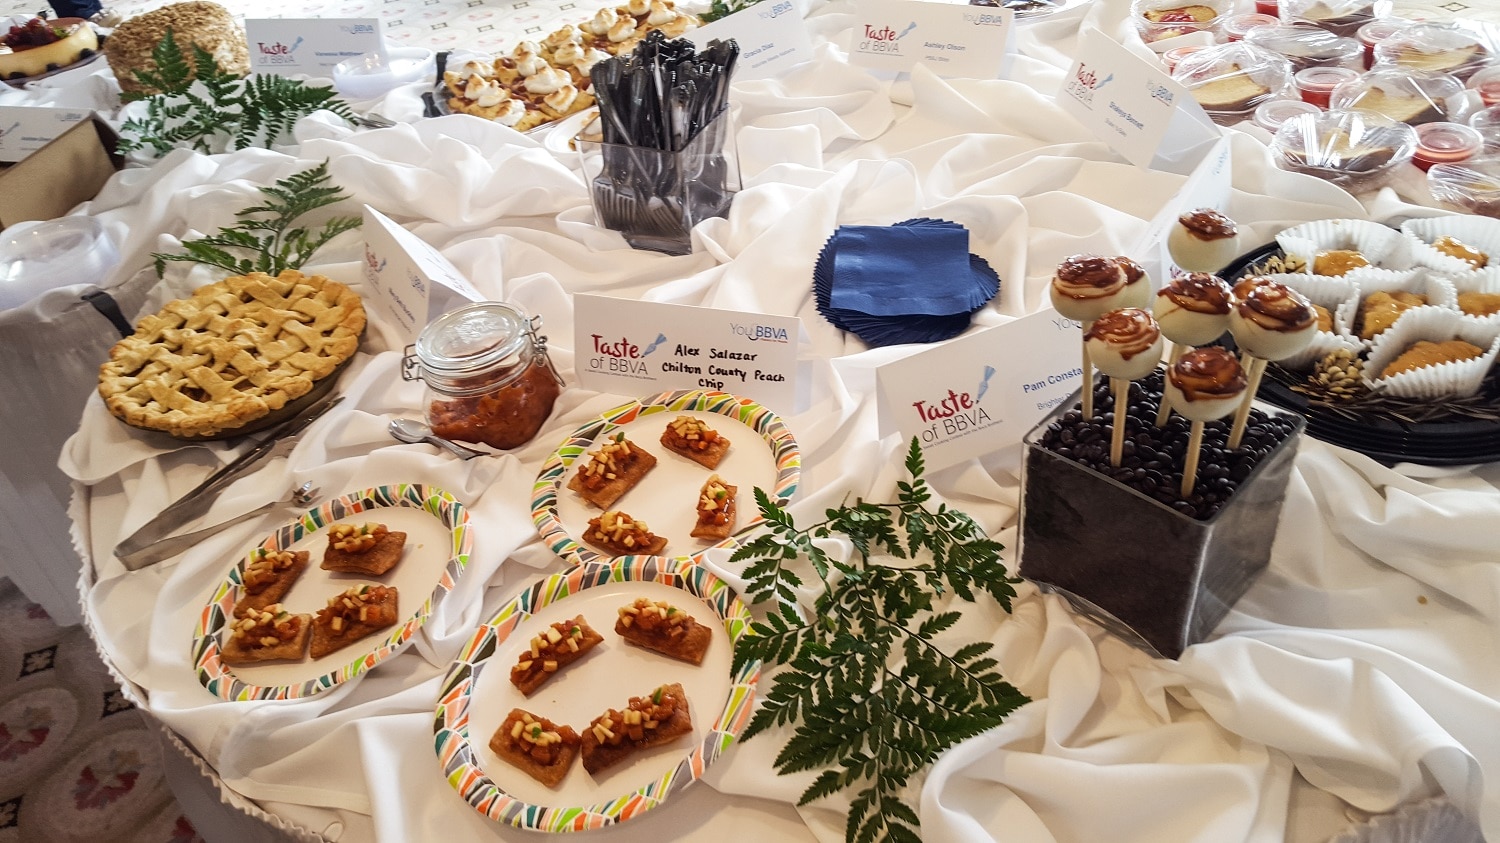 The best dessert contest organized by BBVA Compass